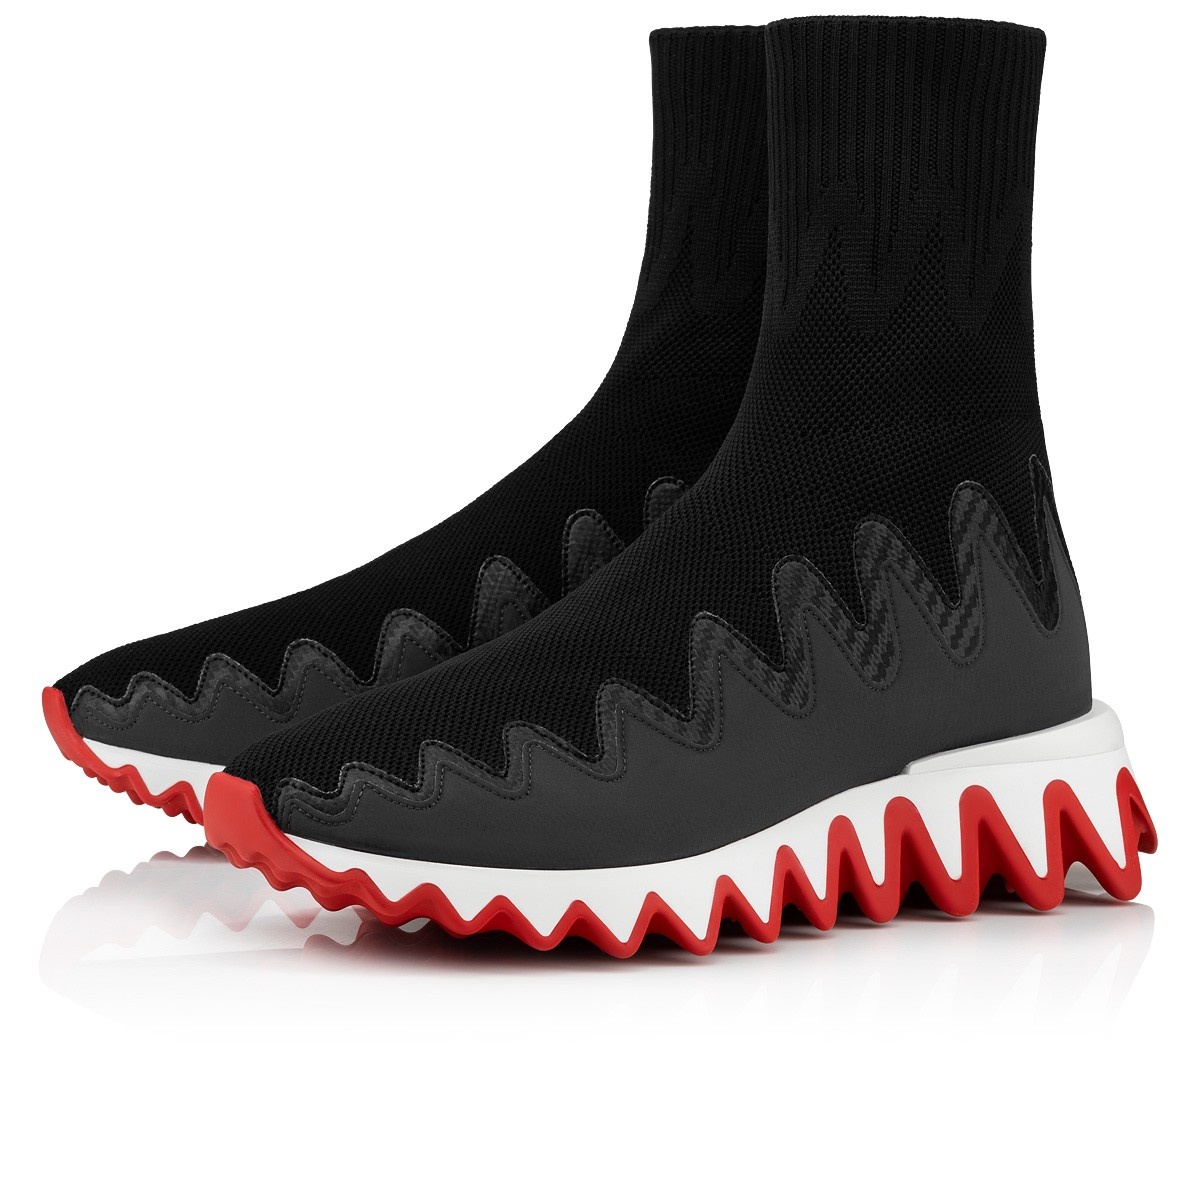 Sharky Sock Black - 3